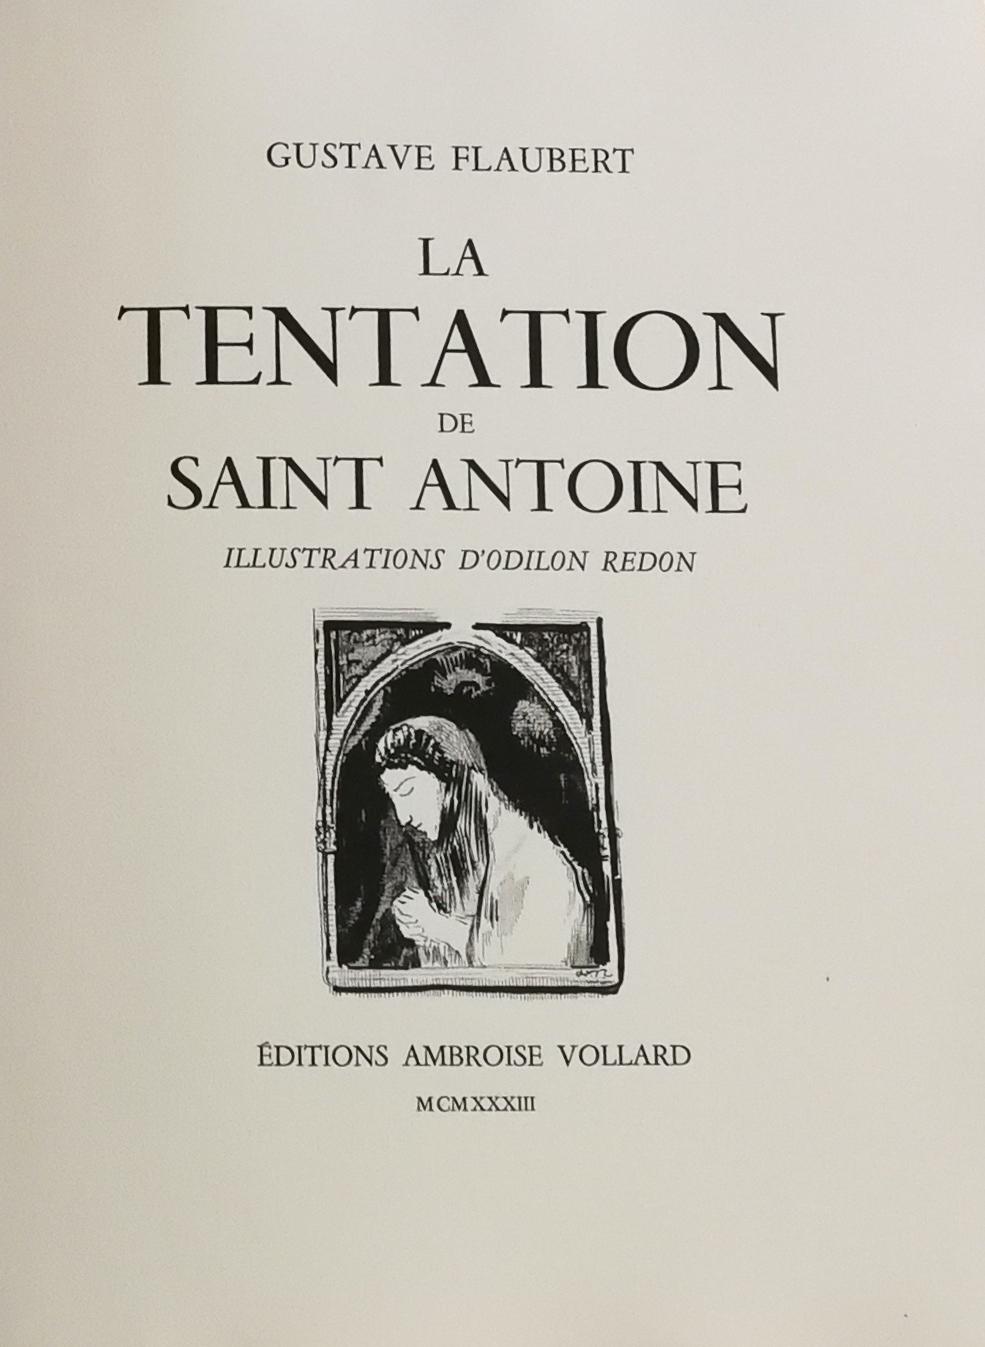 Odilon Redon Figurative Print - La Tentation de Saint Antoine, Gustave Flaubert's illustrated book by O. Redon